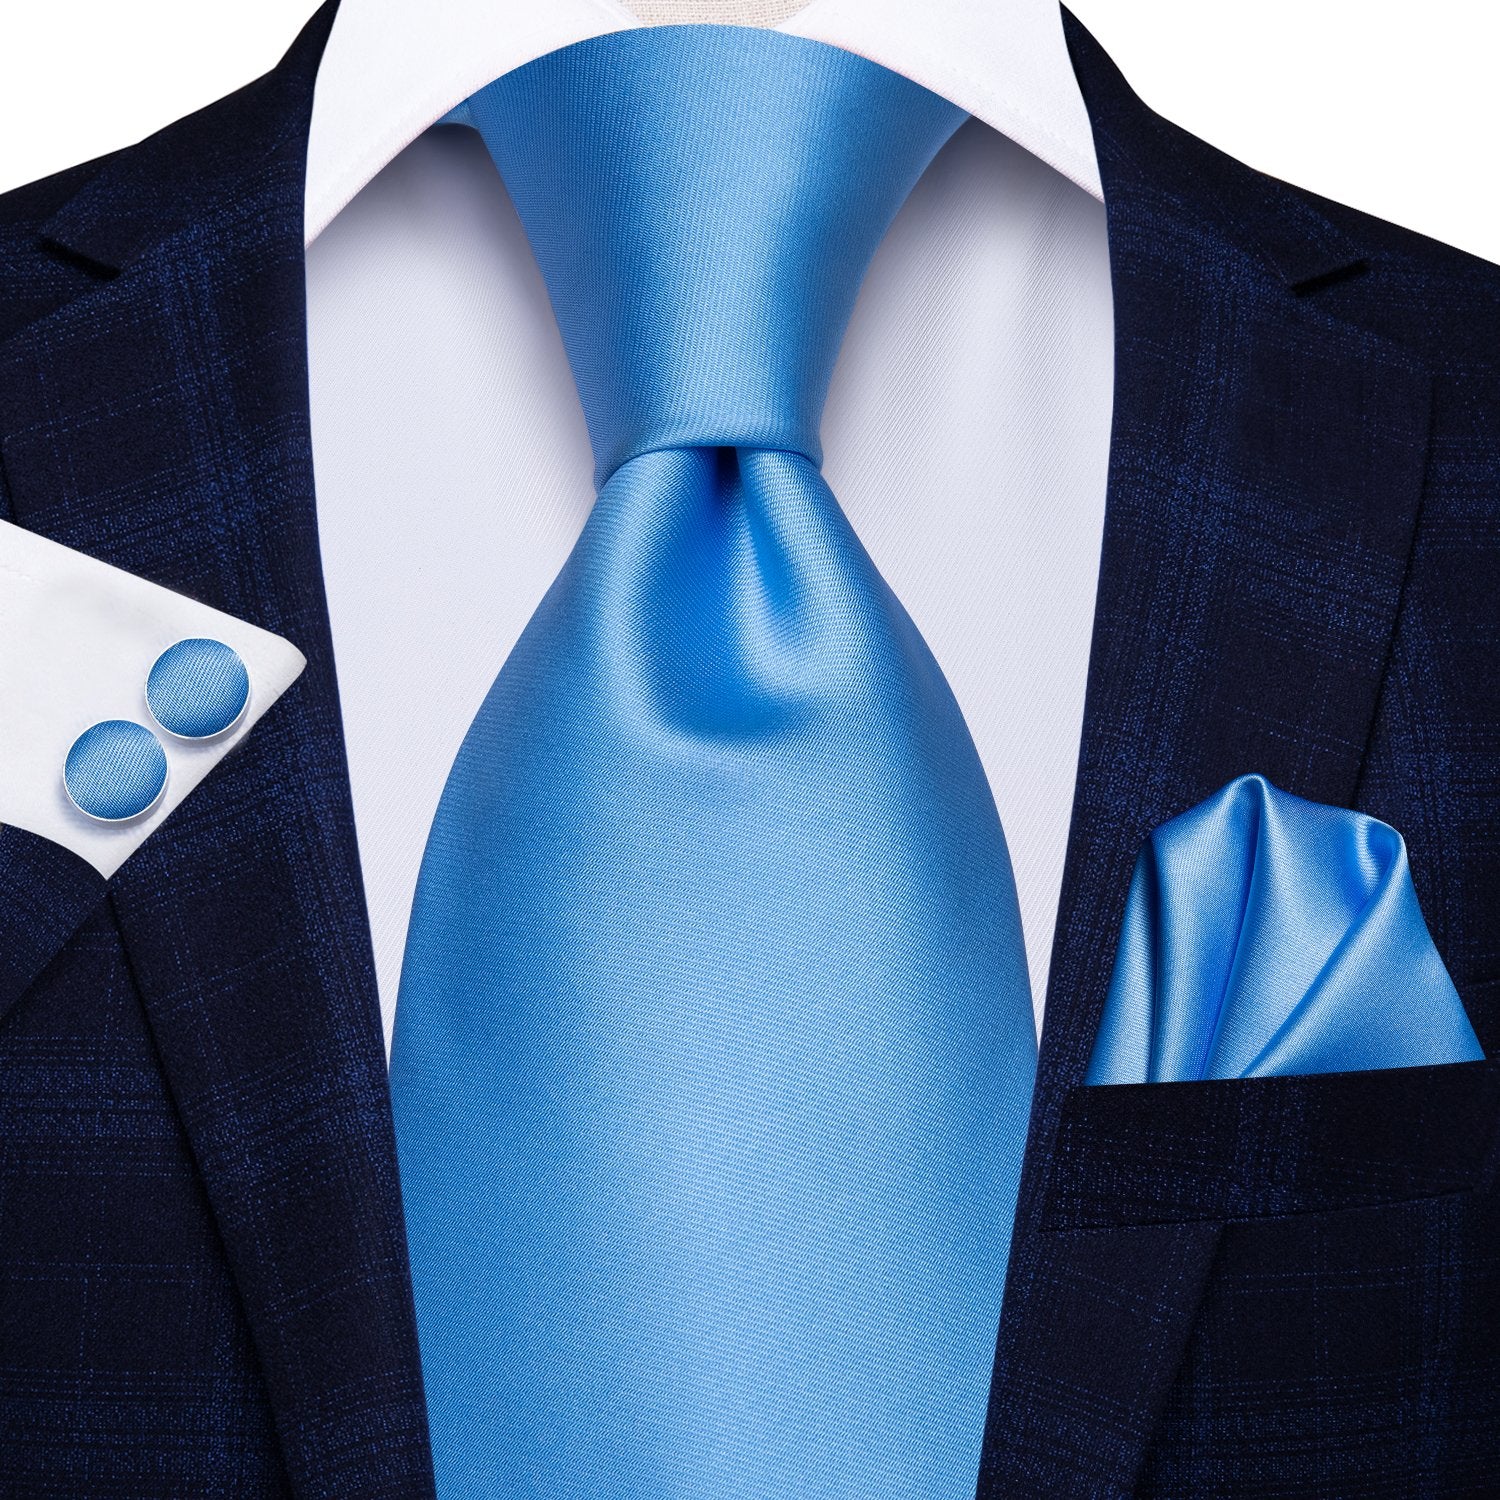 Baby Blue PlainTie Handkerchief Cufflinks Set with Wedding Brooch